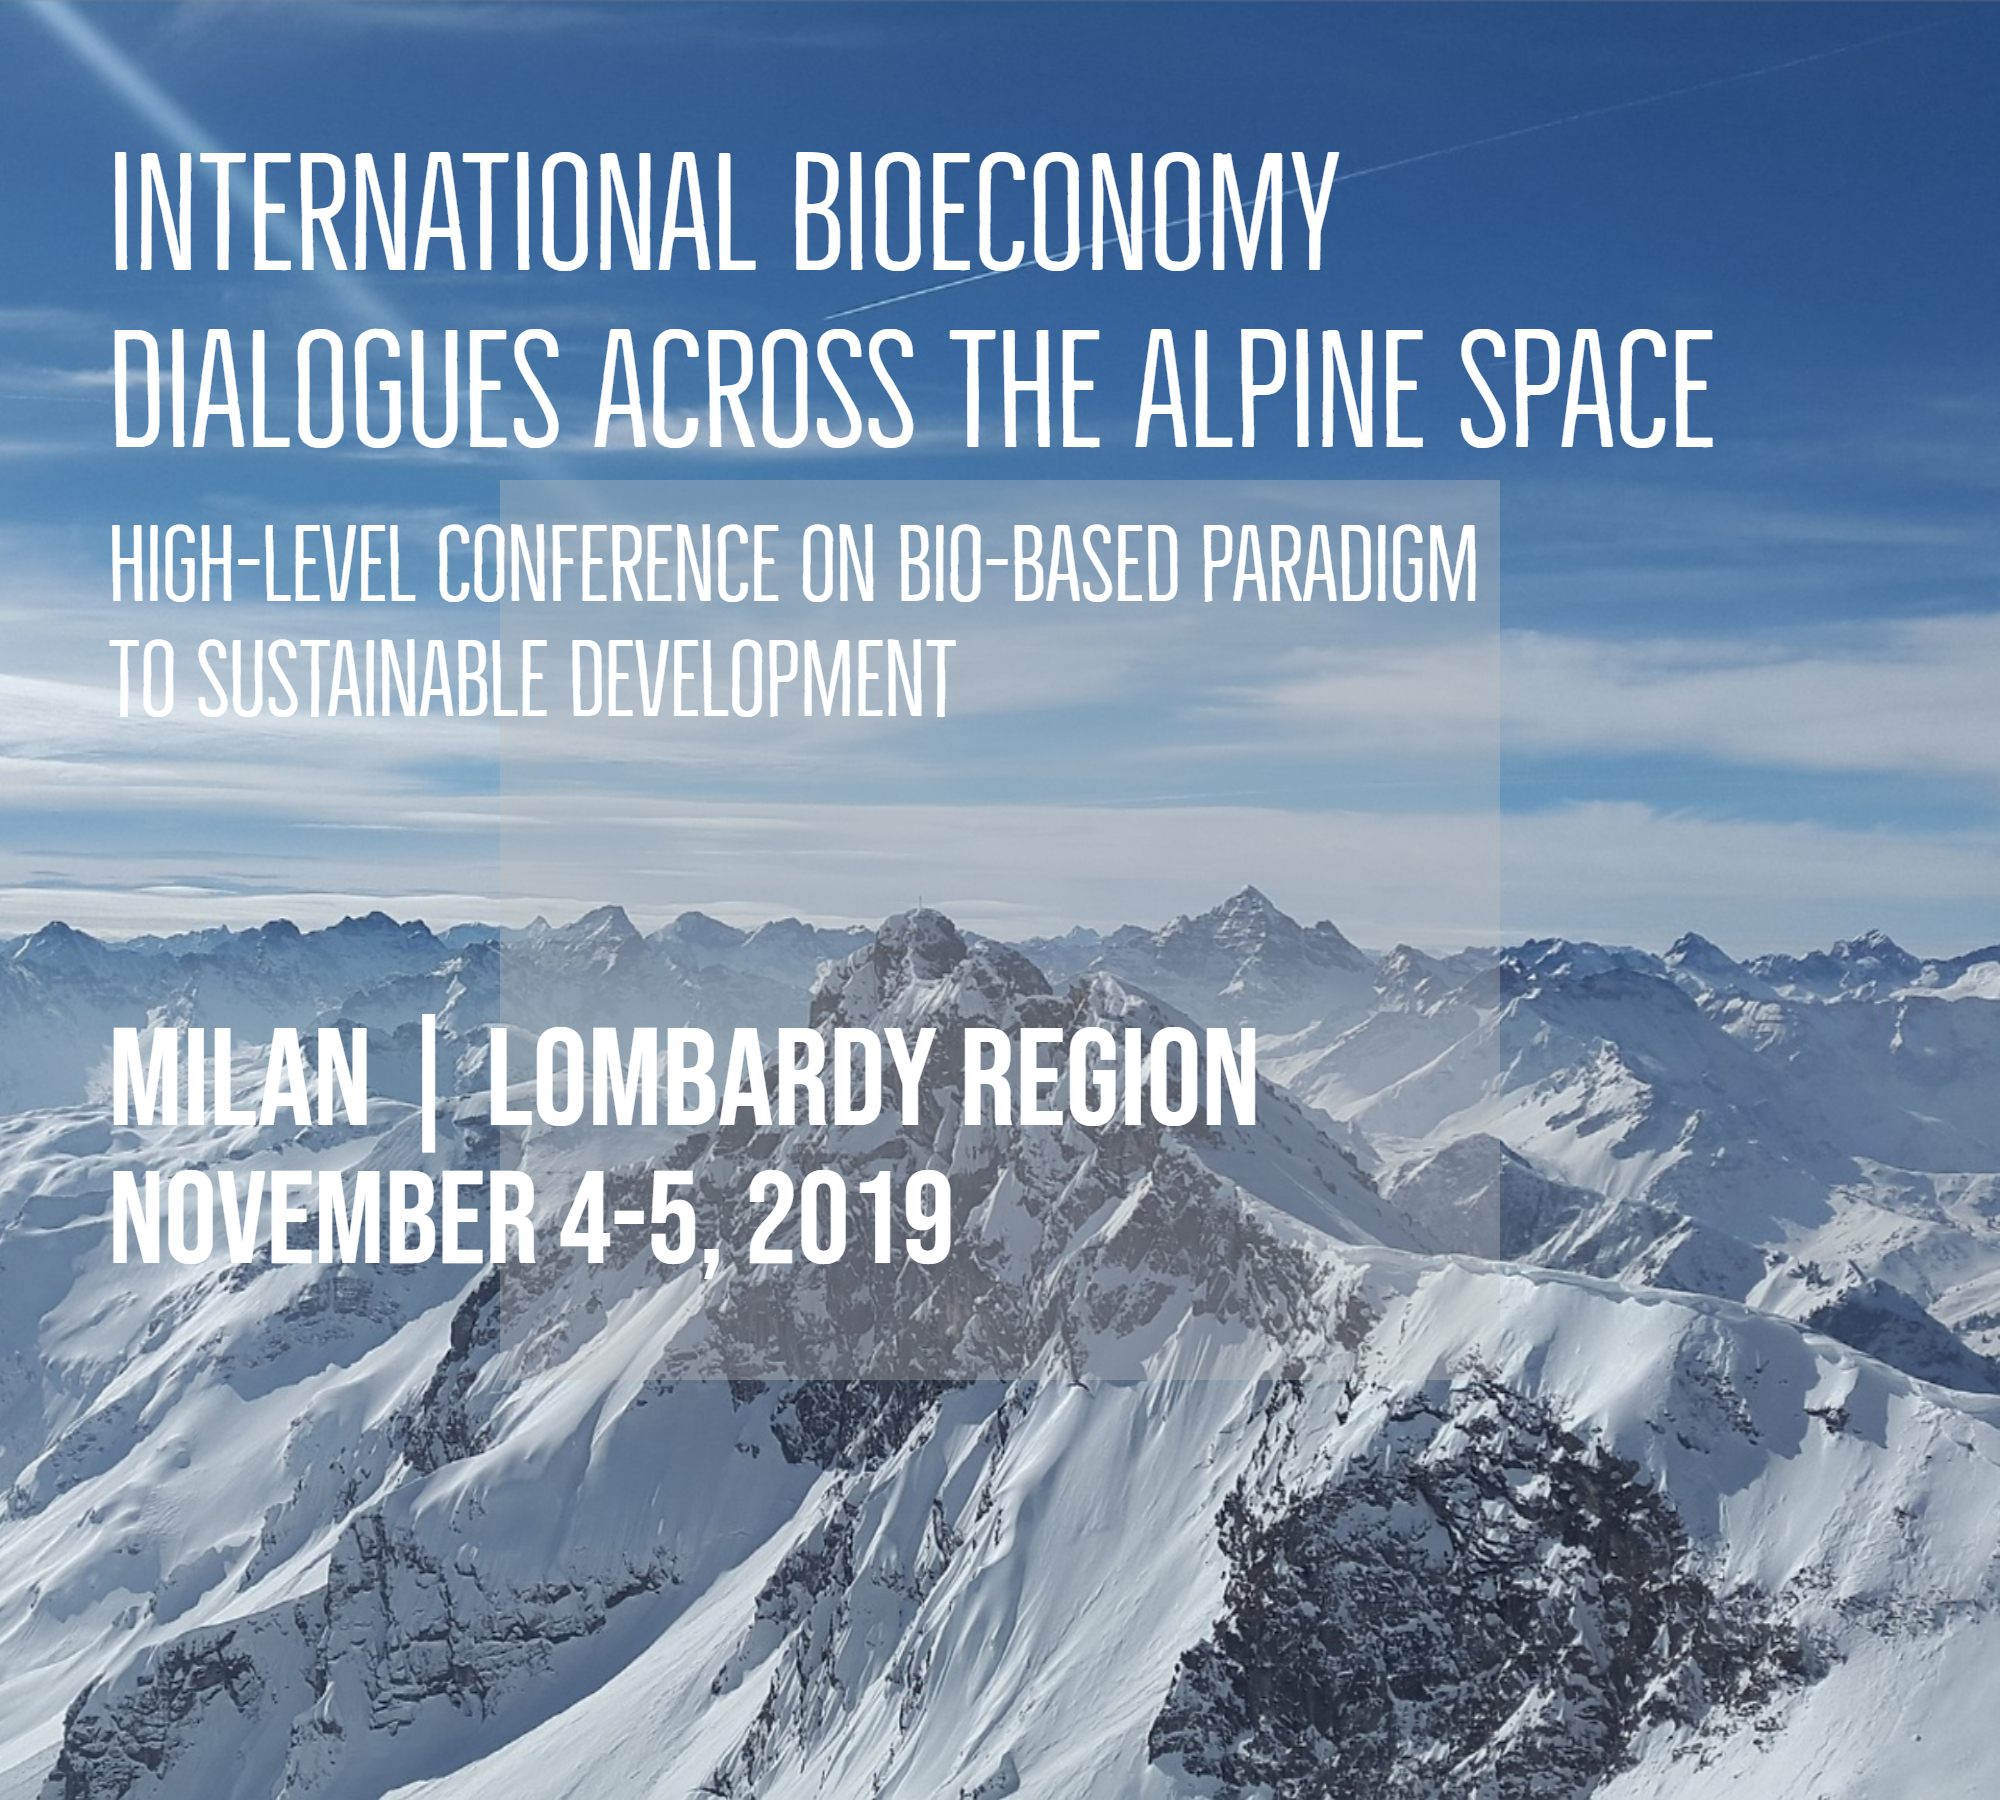 International bioeconomy dialogues across the alpine space